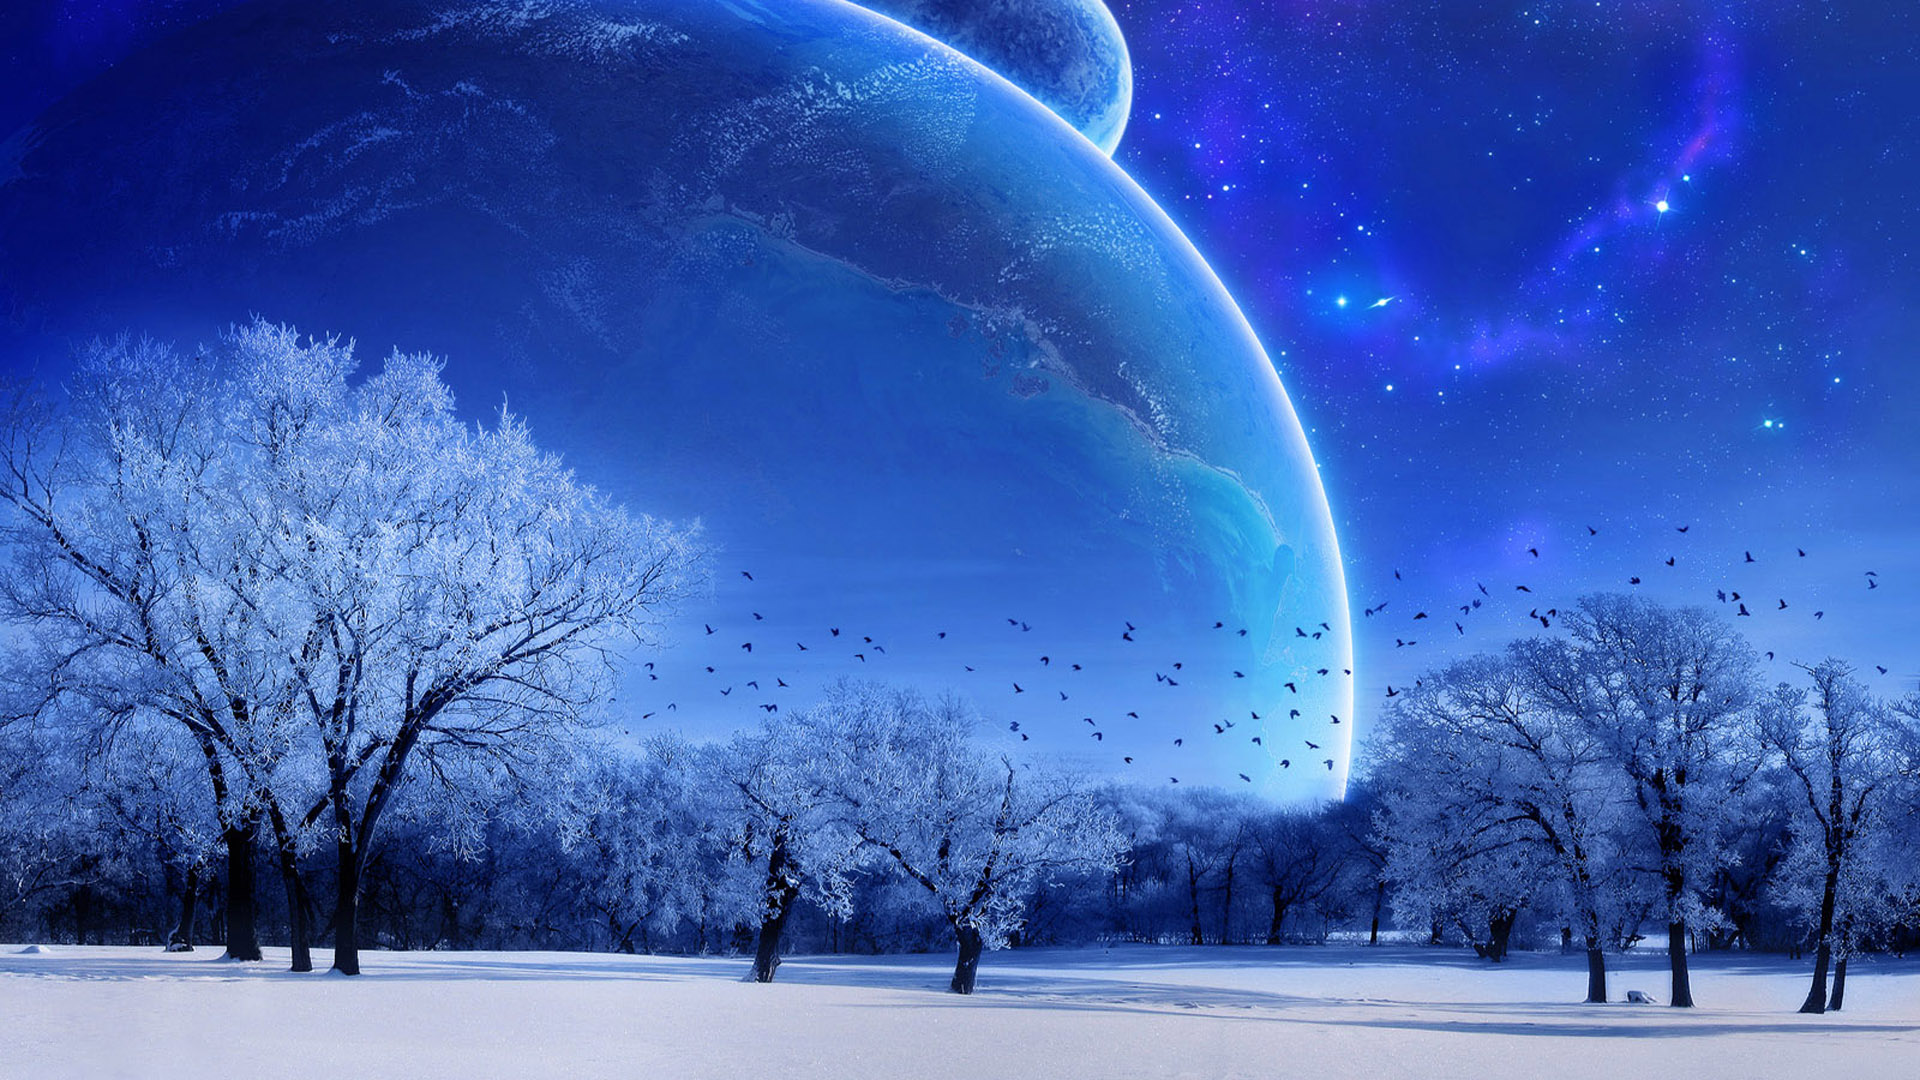 Digital Art Winter Scene with Huge Planets Visible | DIGITAL ART